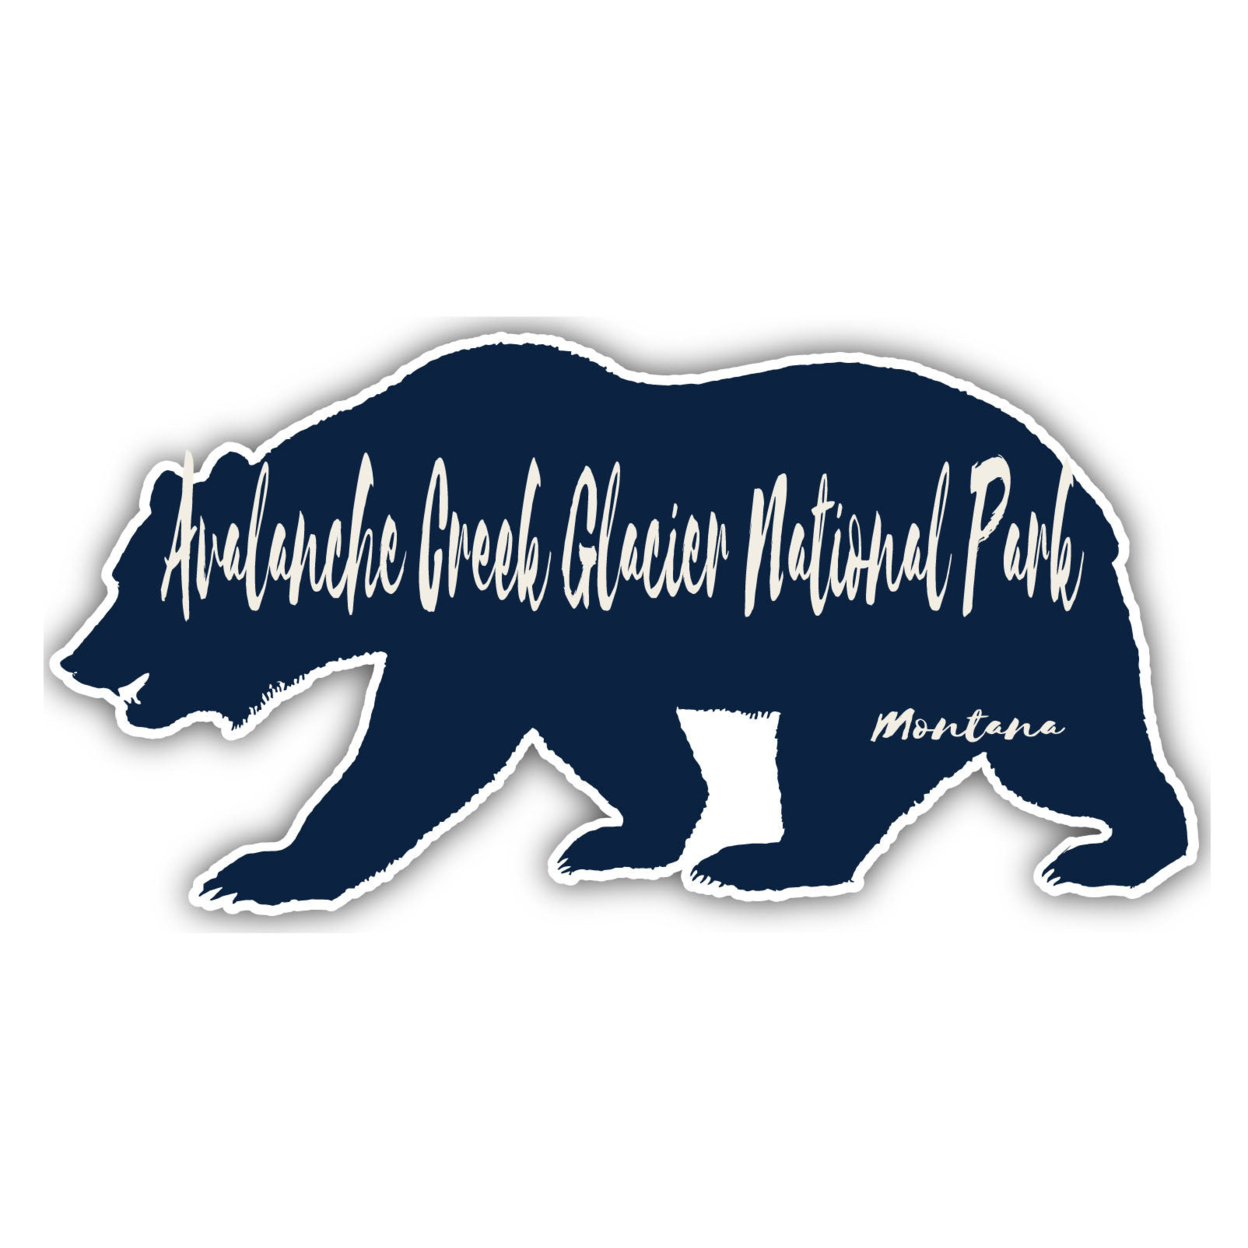 Avalanche Creek Glacier National Park Montana Souvenir Decorative Stickers (Choose Theme And Size) - Single Unit, 10-Inch, Bear